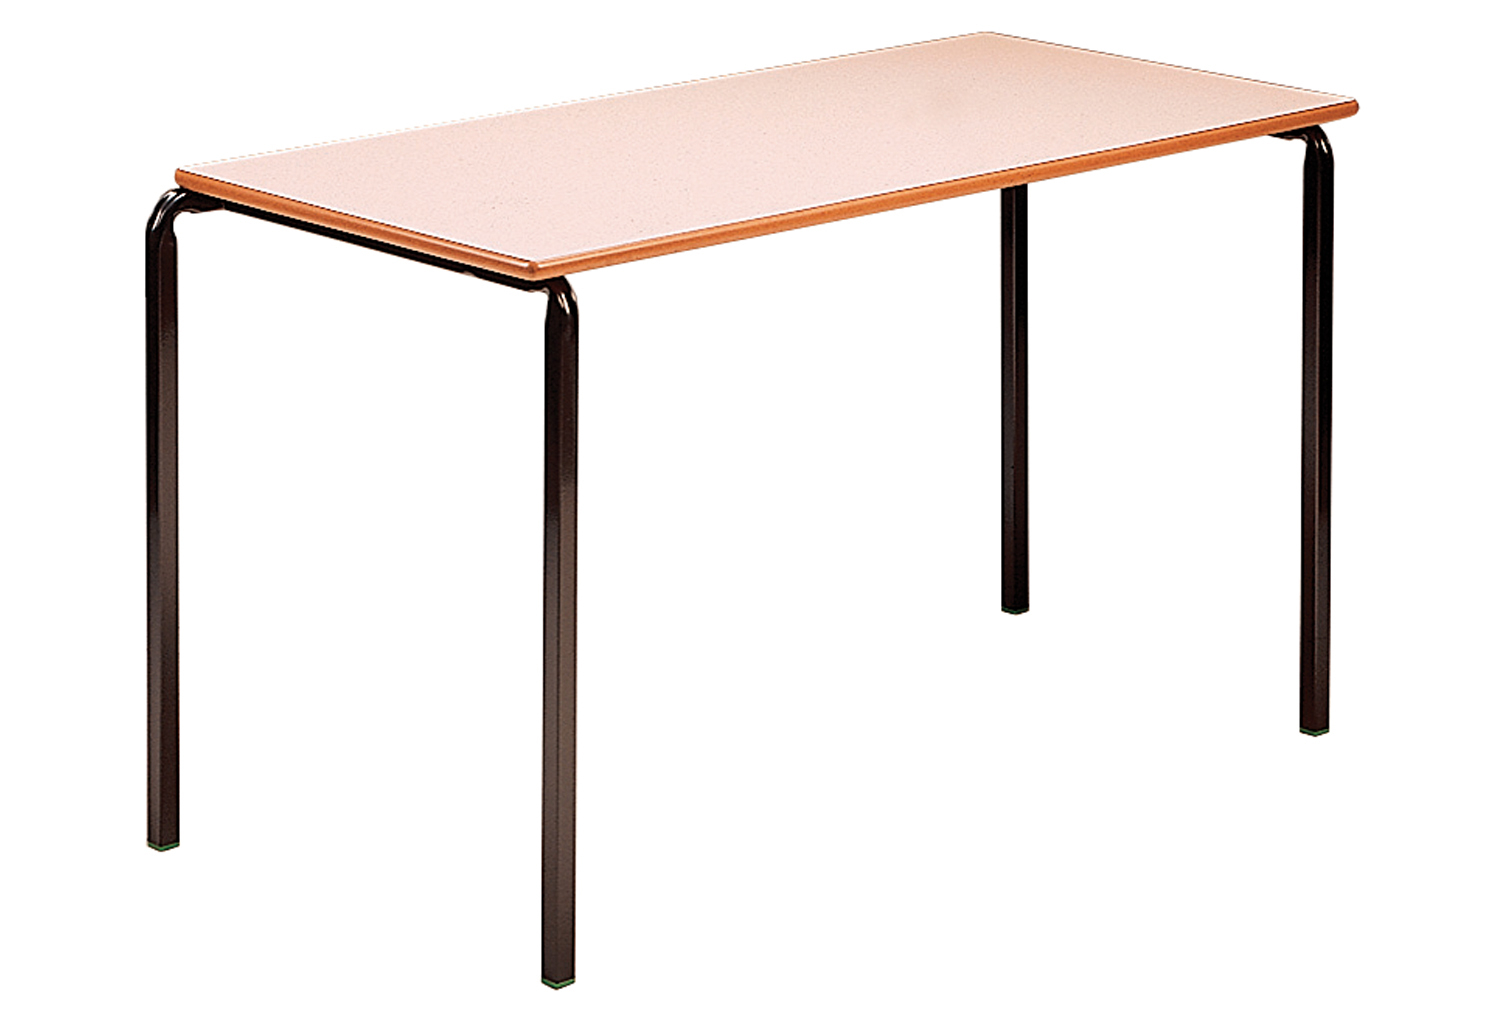 Qty 4 - Rectangular Crush Bent Classroom Tables 14+ Years, 120wx60dx76h (cm), Black Frame, Beech Top, MDF Beech Edge